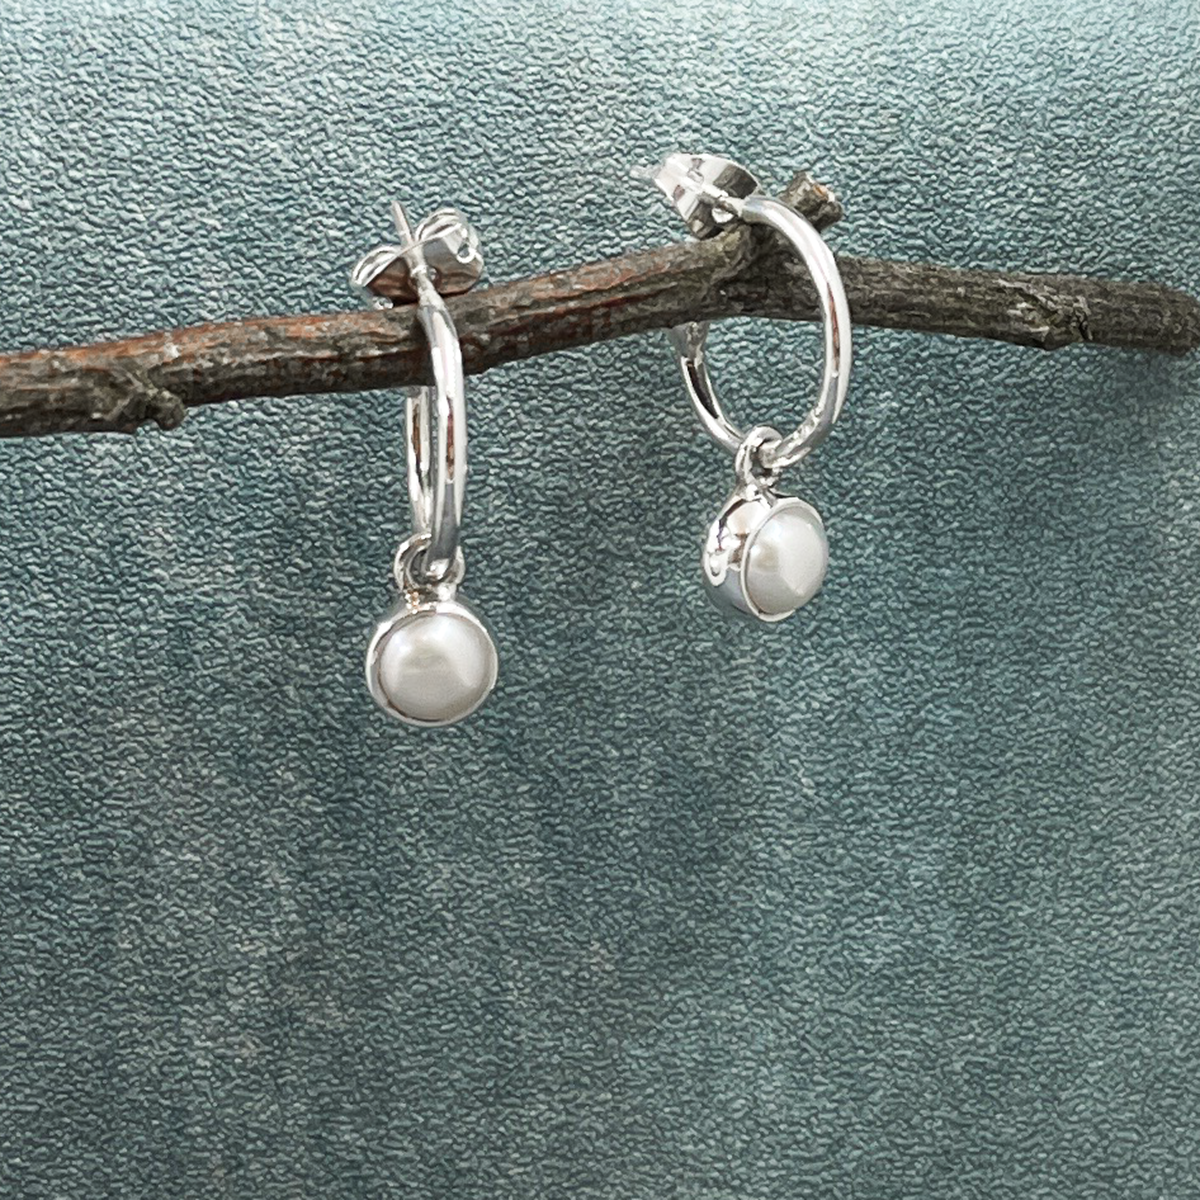 Pearla - White Mounted Pearl on Hoop Silver Earrings